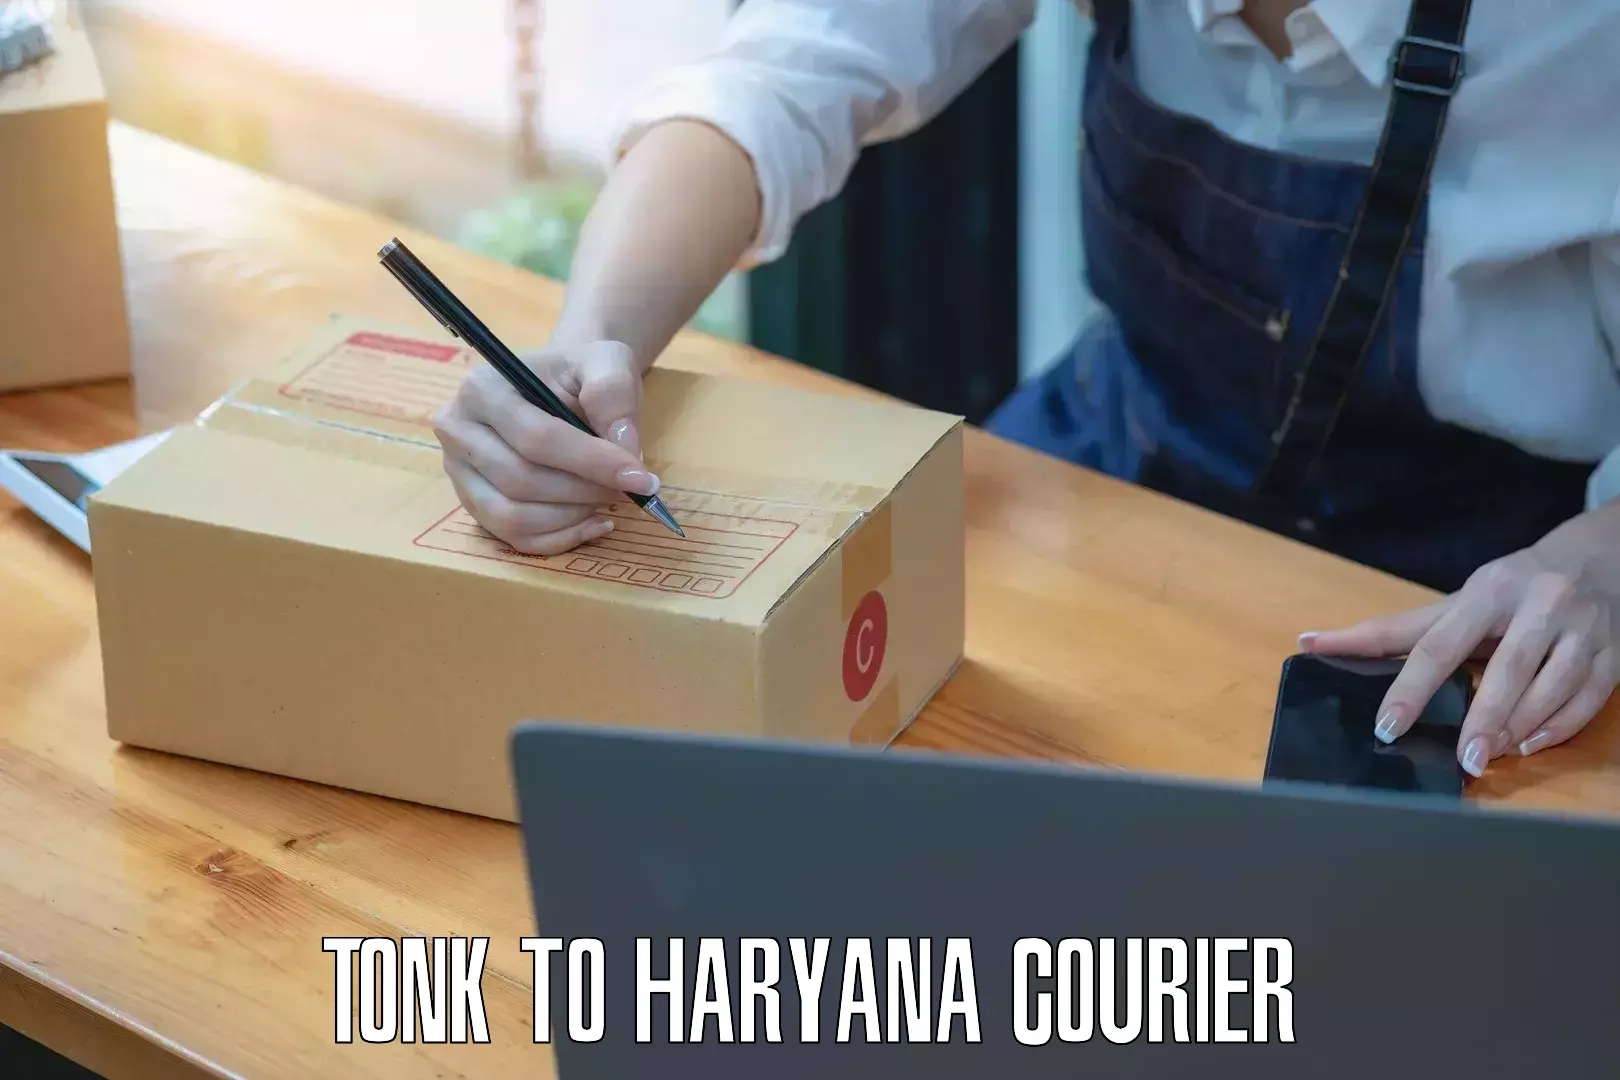 Courier service partnerships Tonk to Hansi